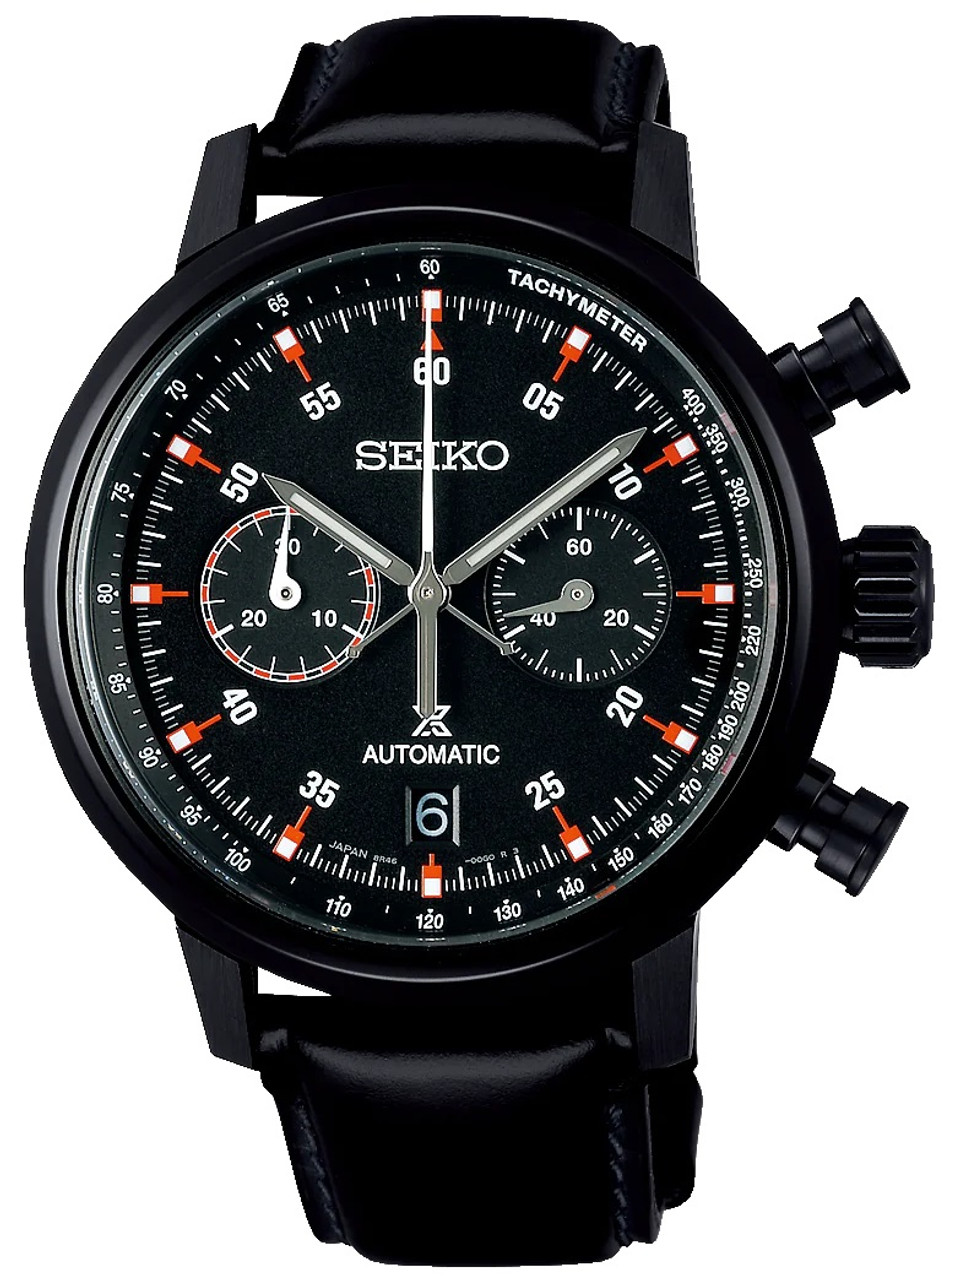 Seiko Speedtimer Full Black Limited SBEC019 (JDM)